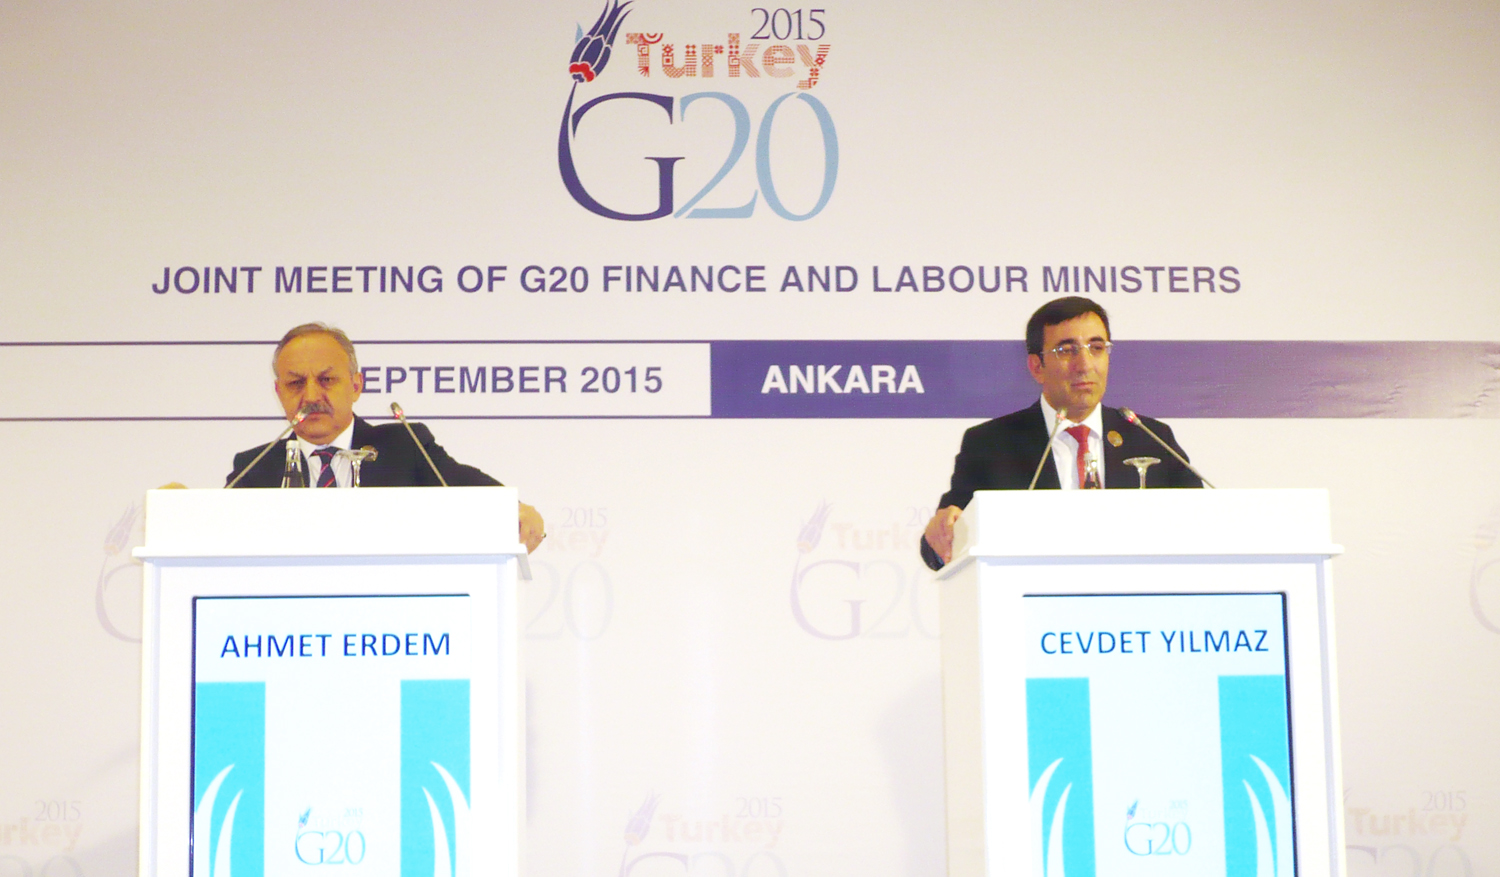 Turkish Deputy Prime Minister Cevdet Yilmaz and Labour Minister Amet Erdem